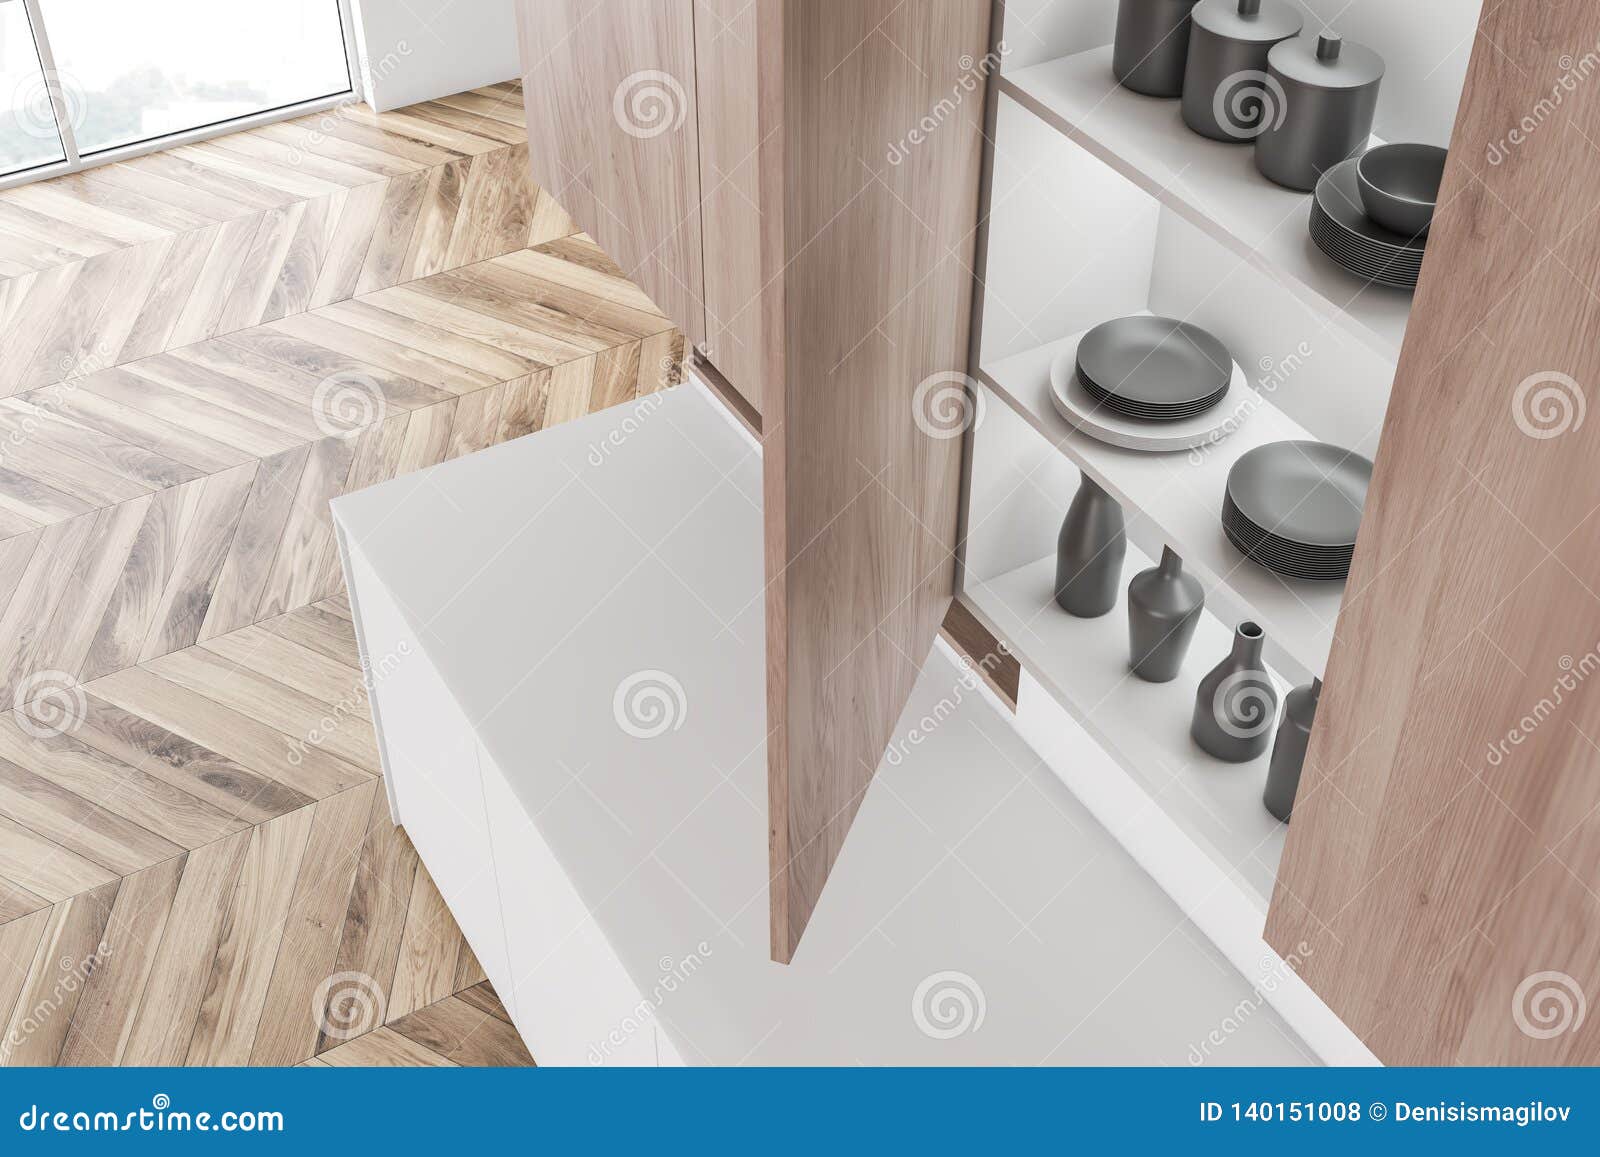 Top View Of White Kitchen Countertops Stock Illustration